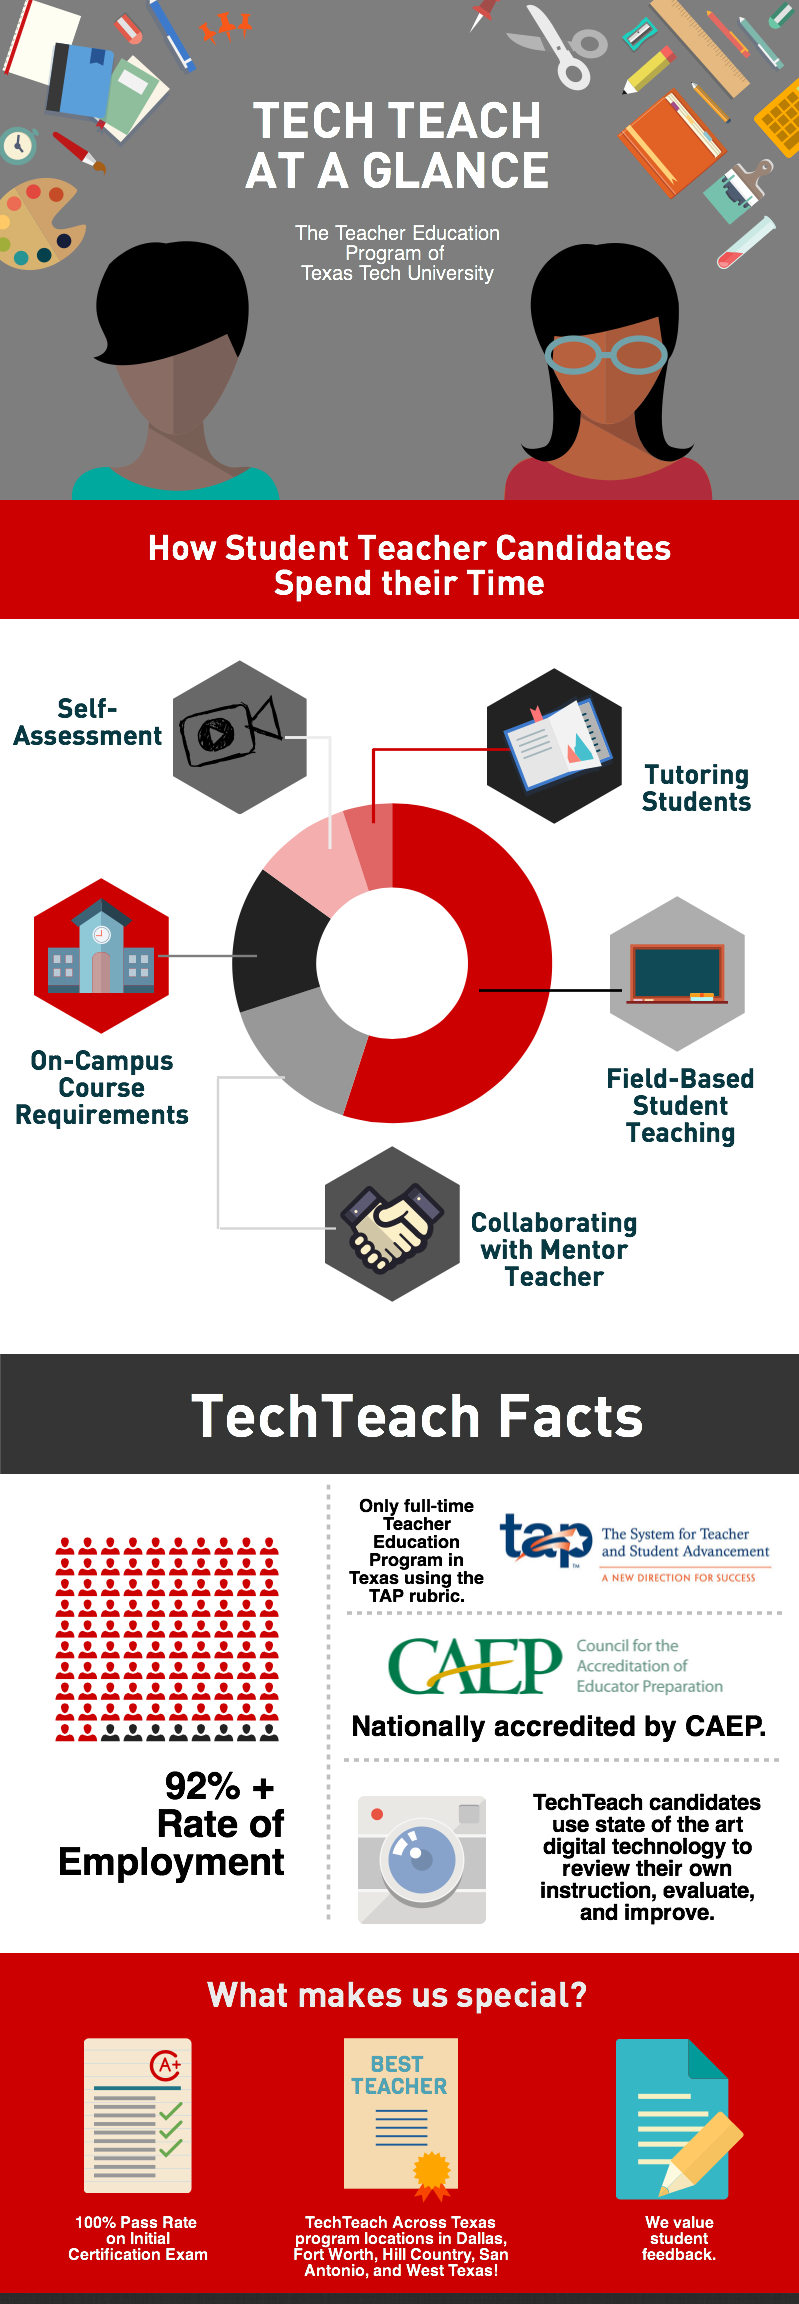 TechTeach At A Glance Infographic